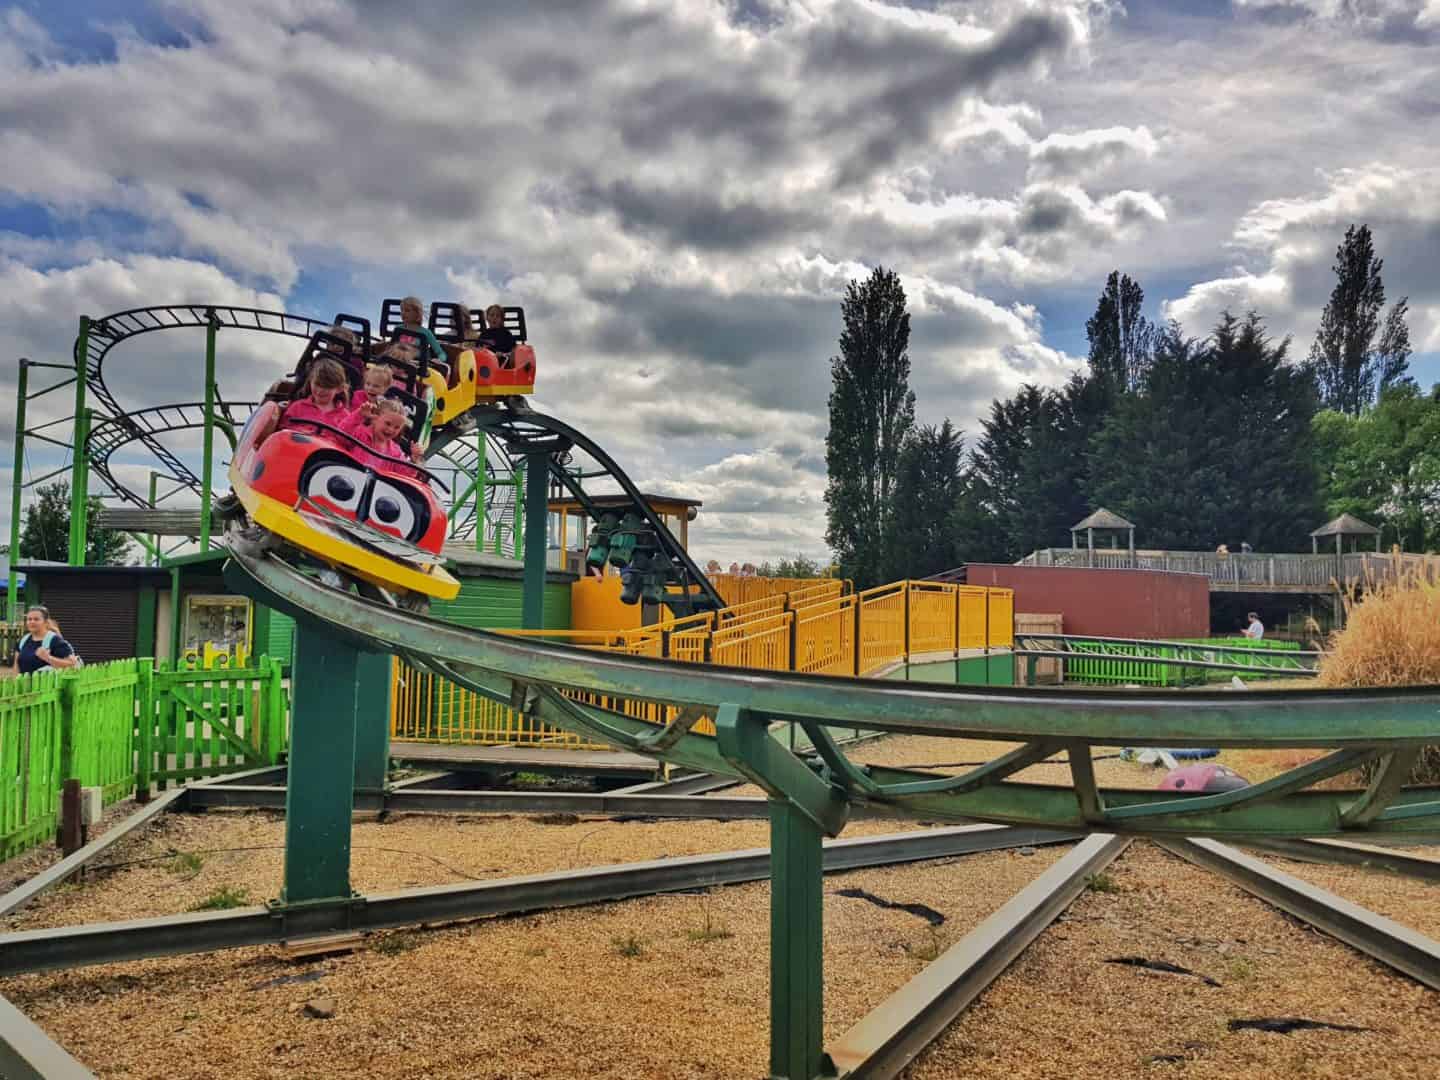 ladybird roller coaster Wicksteed Park